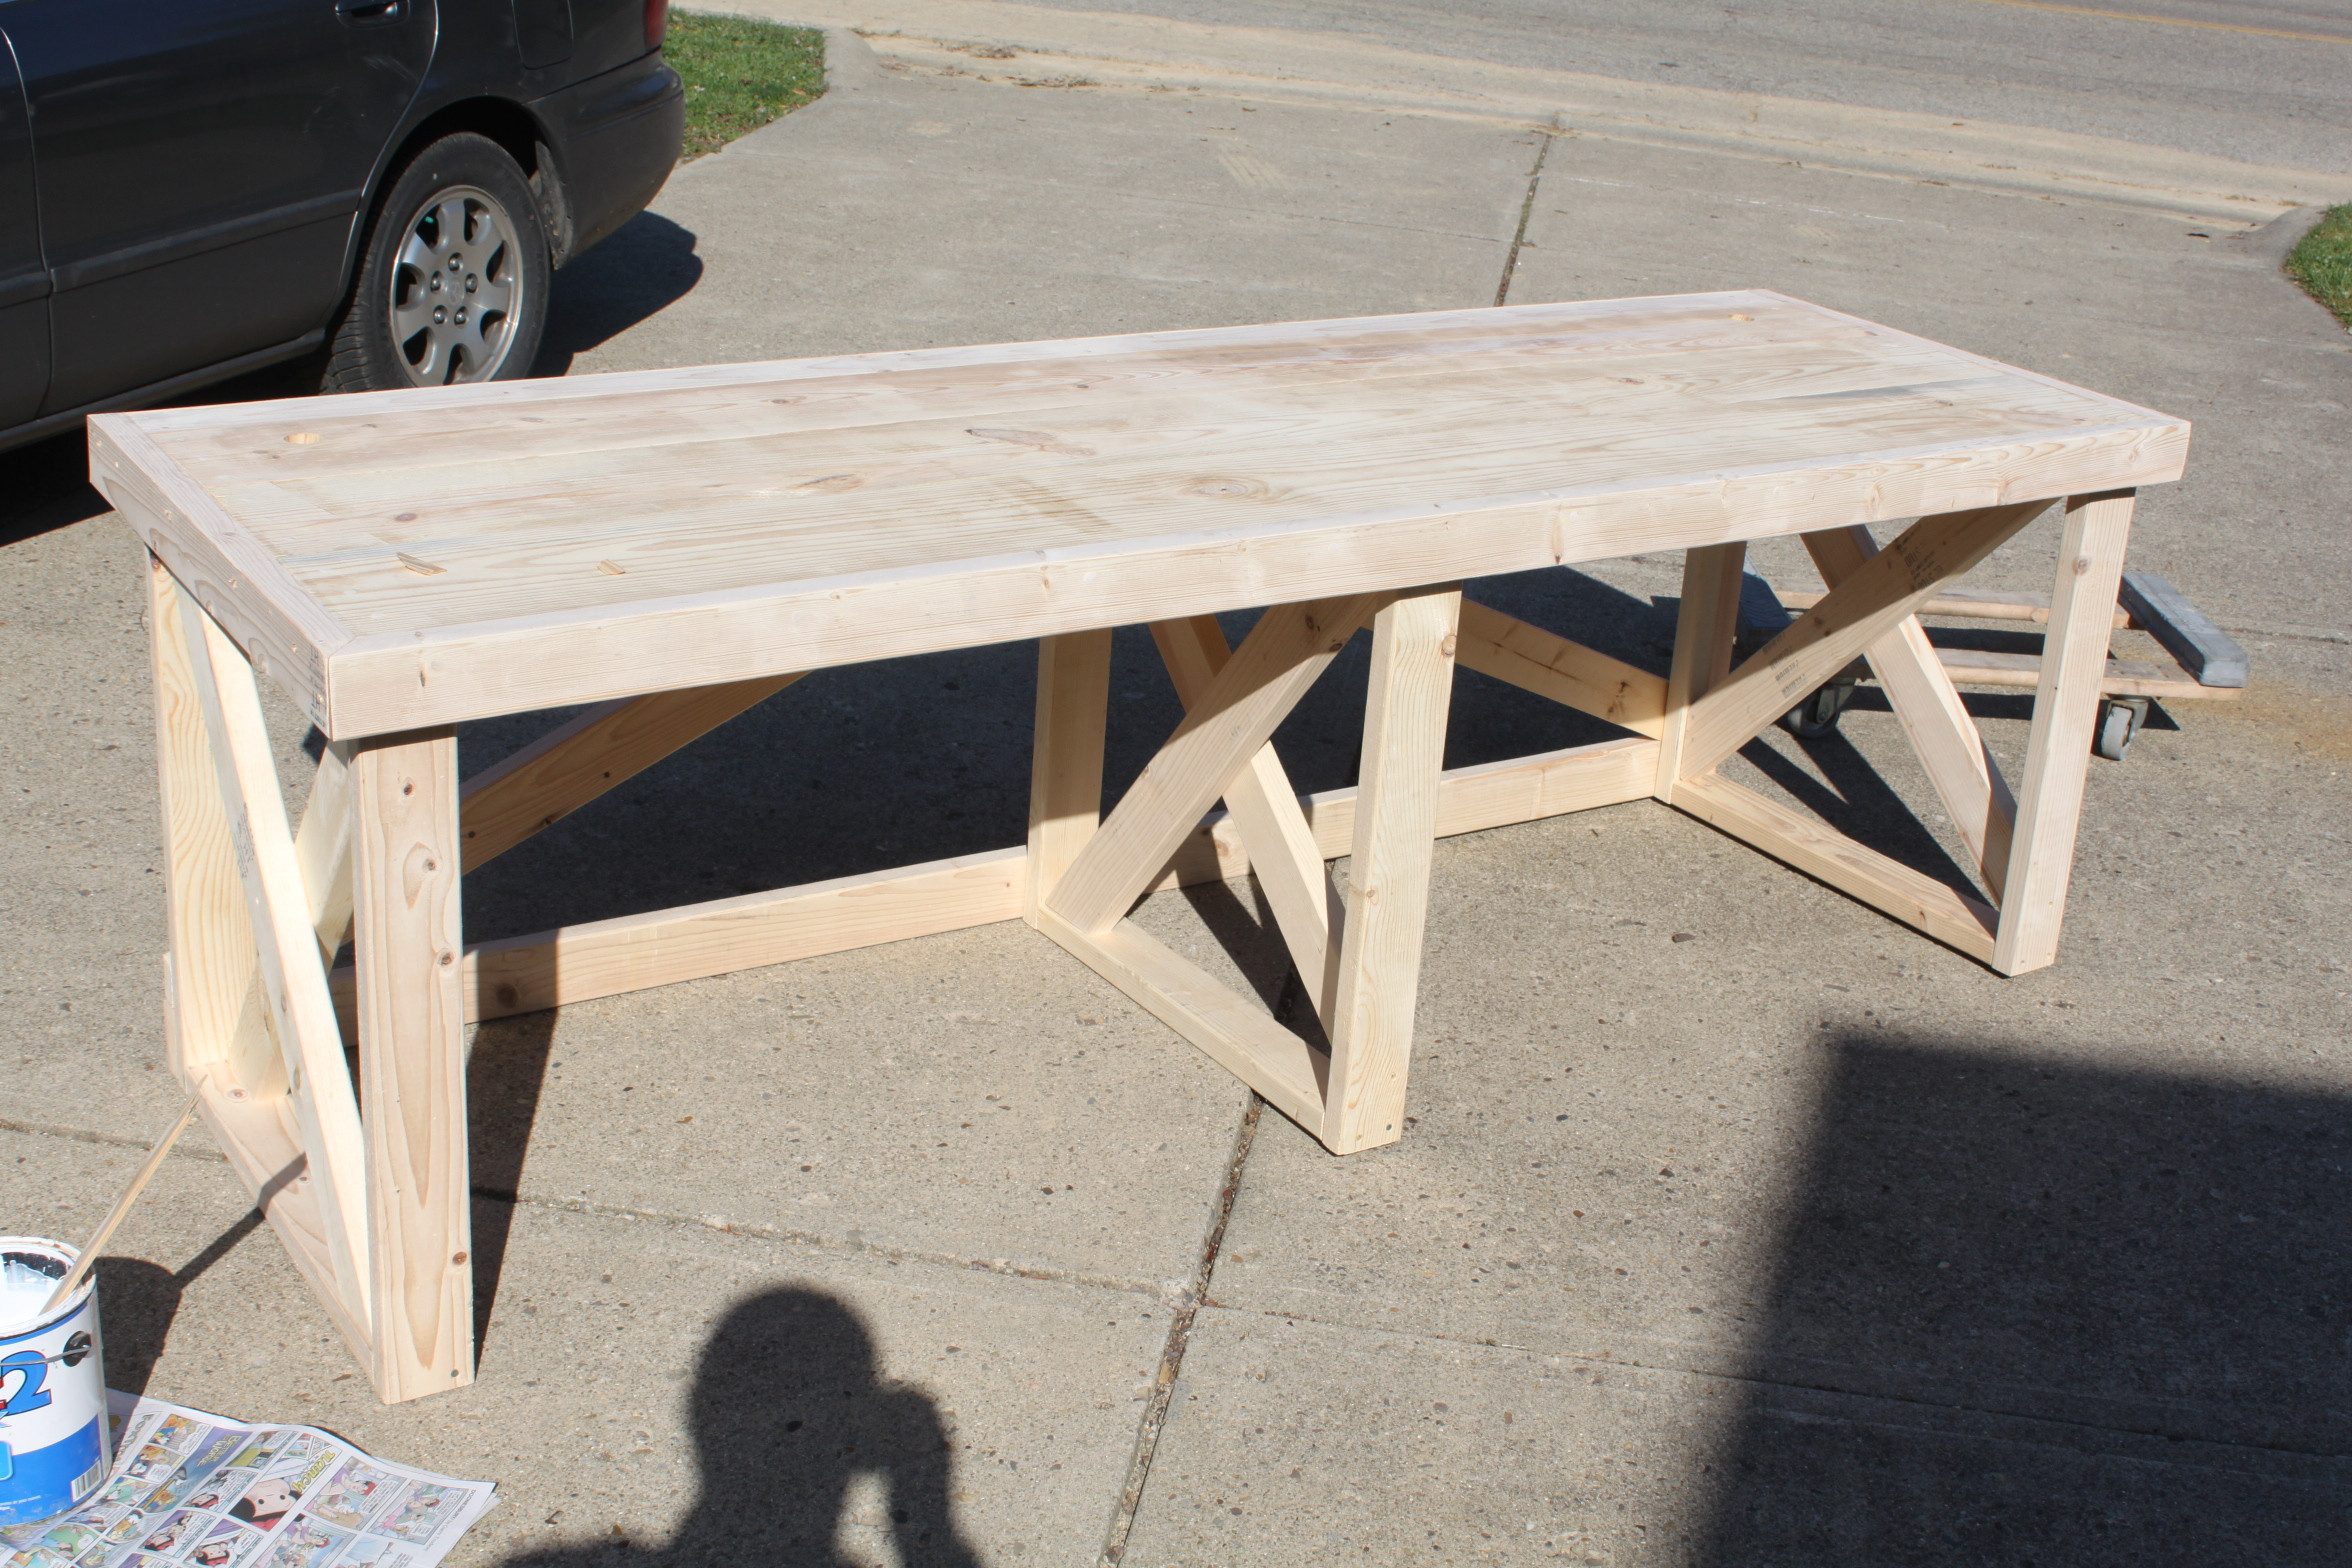 DIY Wood Desks
 How To Build This Trestle Desk From Scrap Lumber